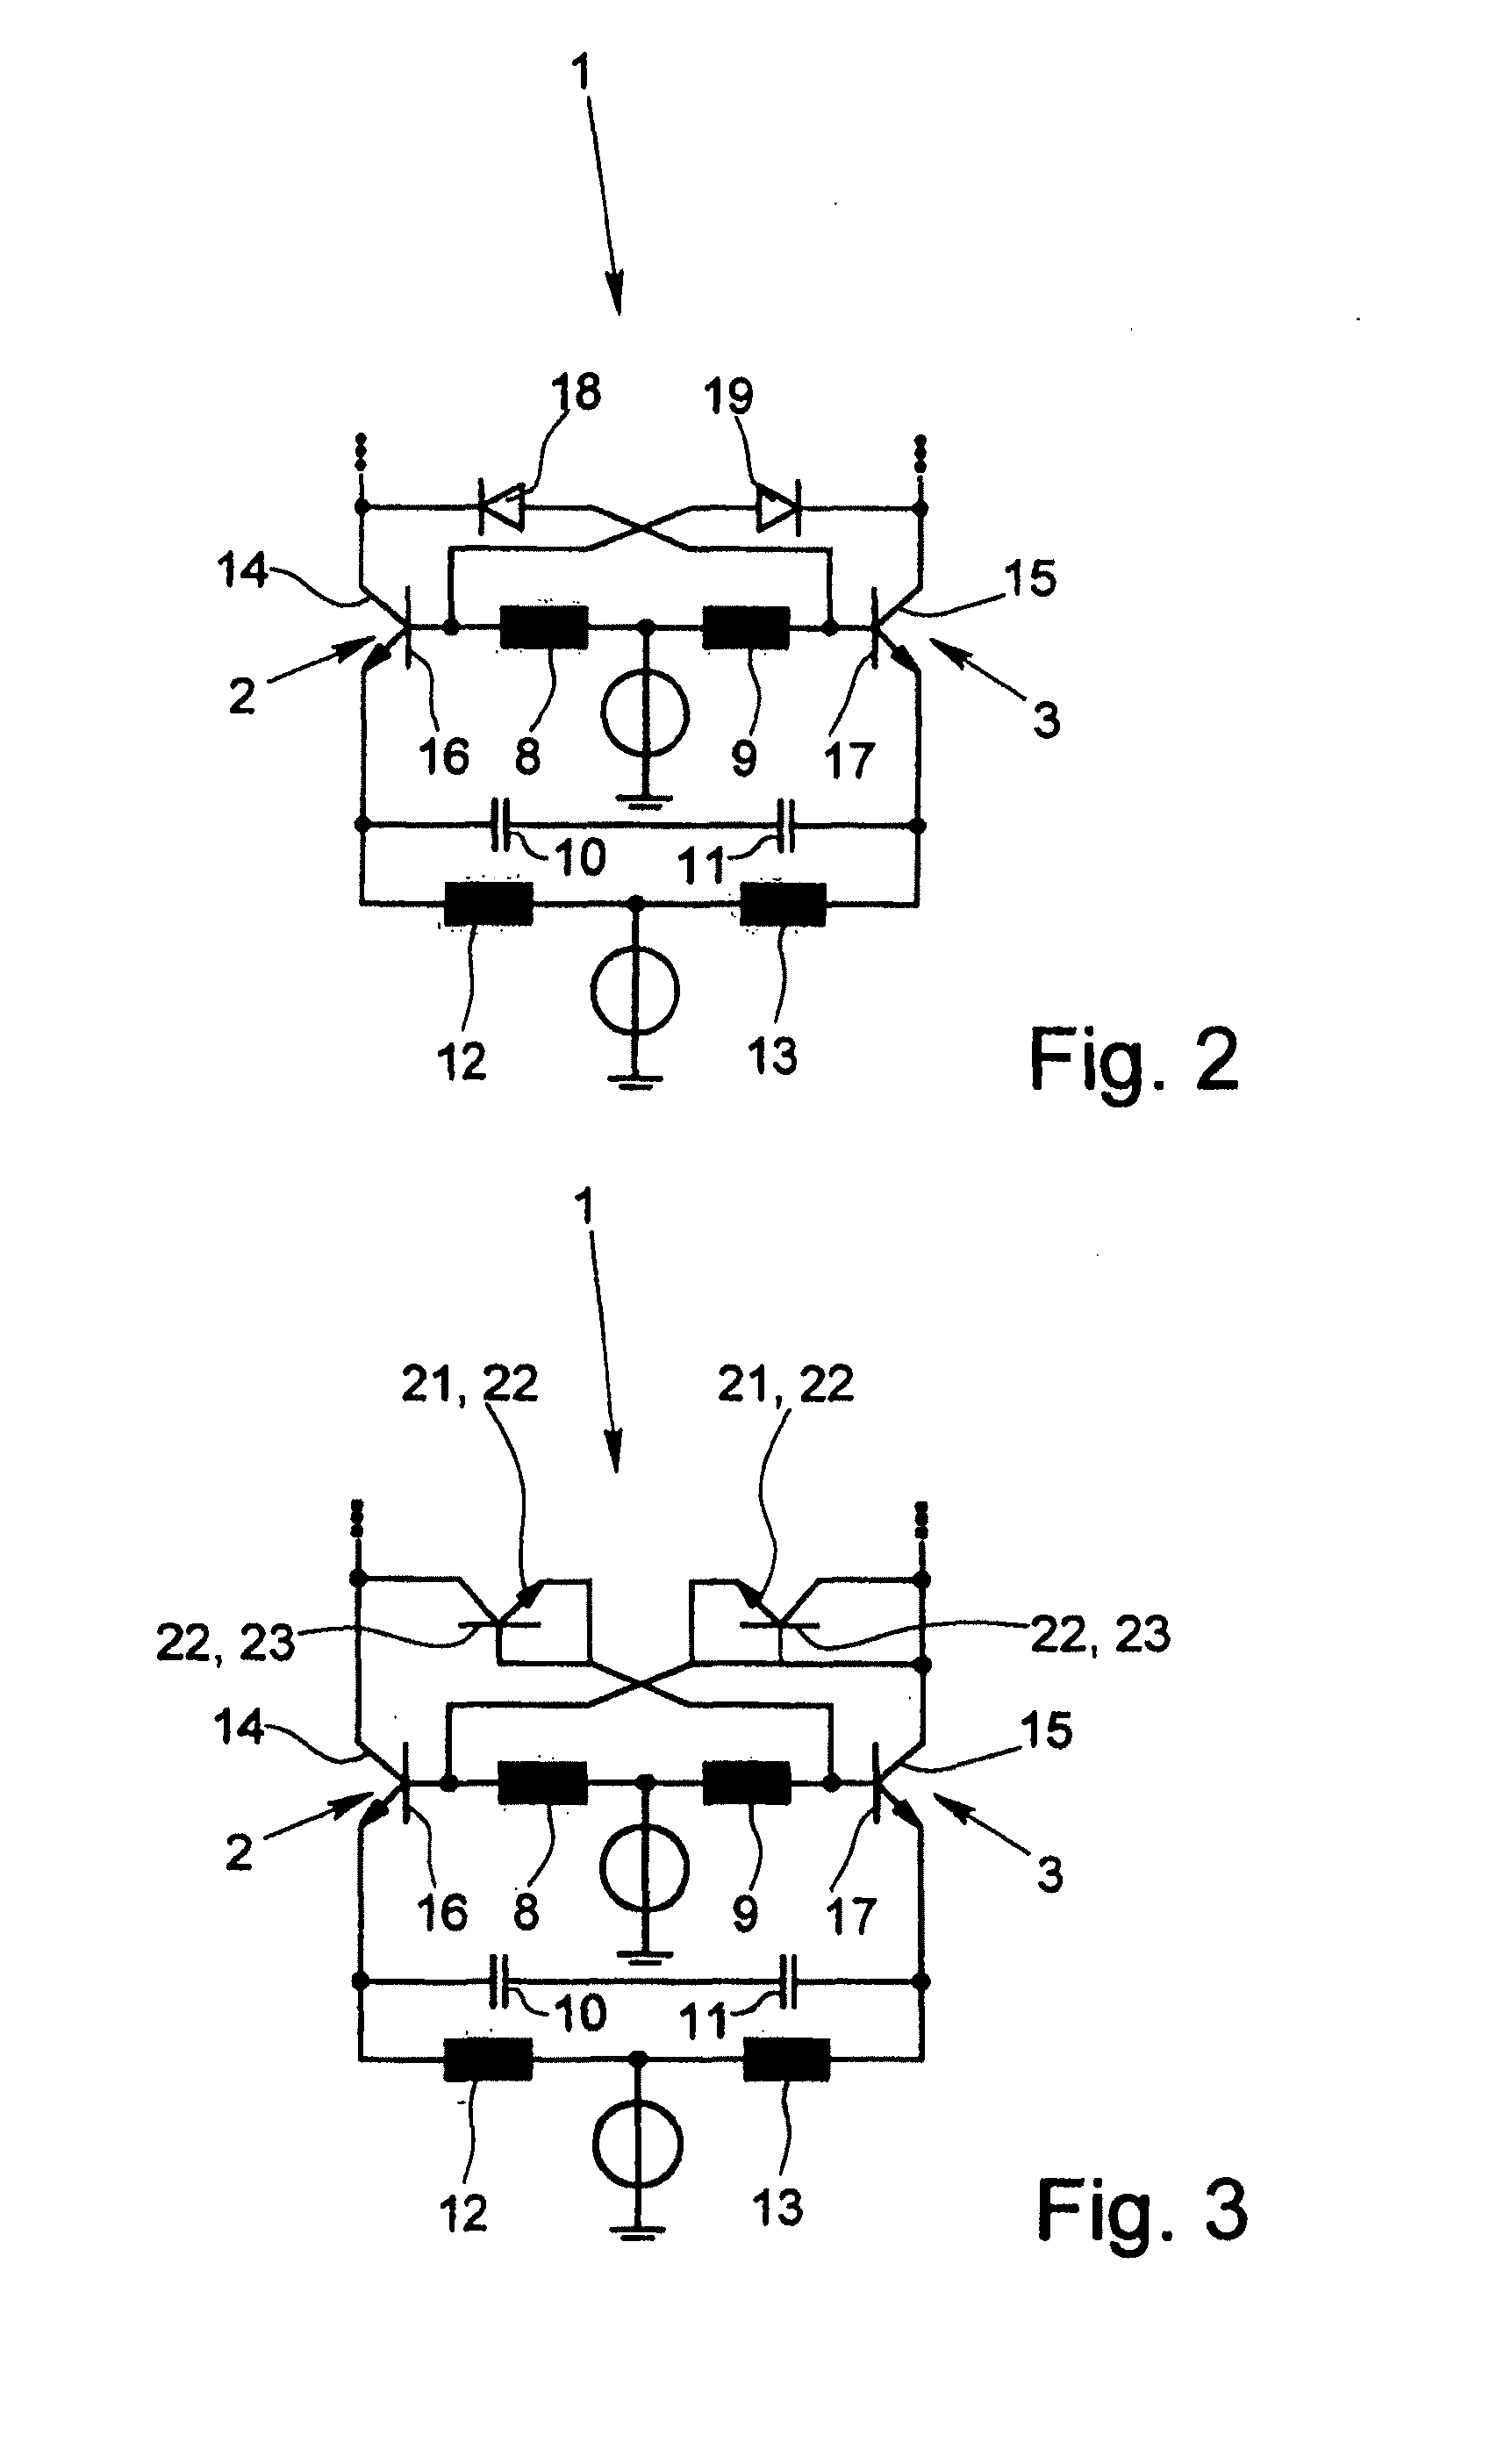 Circuit arrangement for creating microwave oscillations